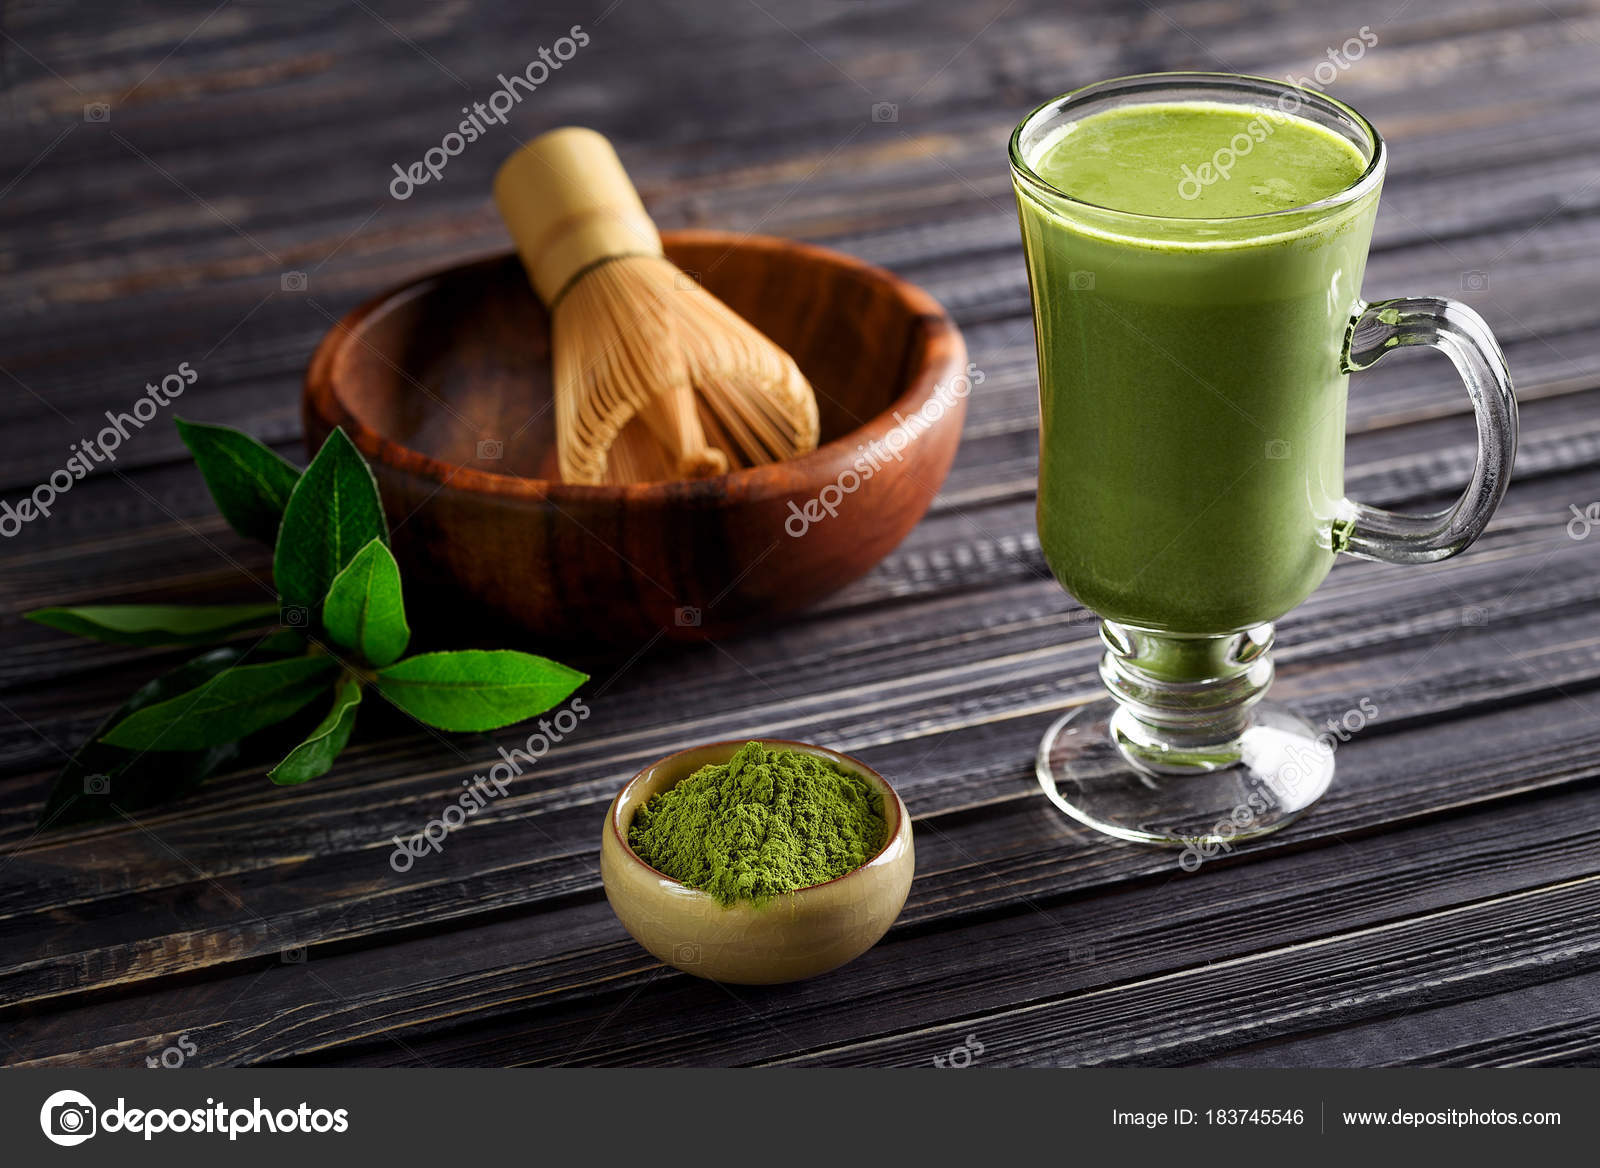 https://st3.depositphotos.com/14378538/18374/i/1600/depositphotos_183745546-stock-photo-matcha-green-tea-latte-beverage.jpg